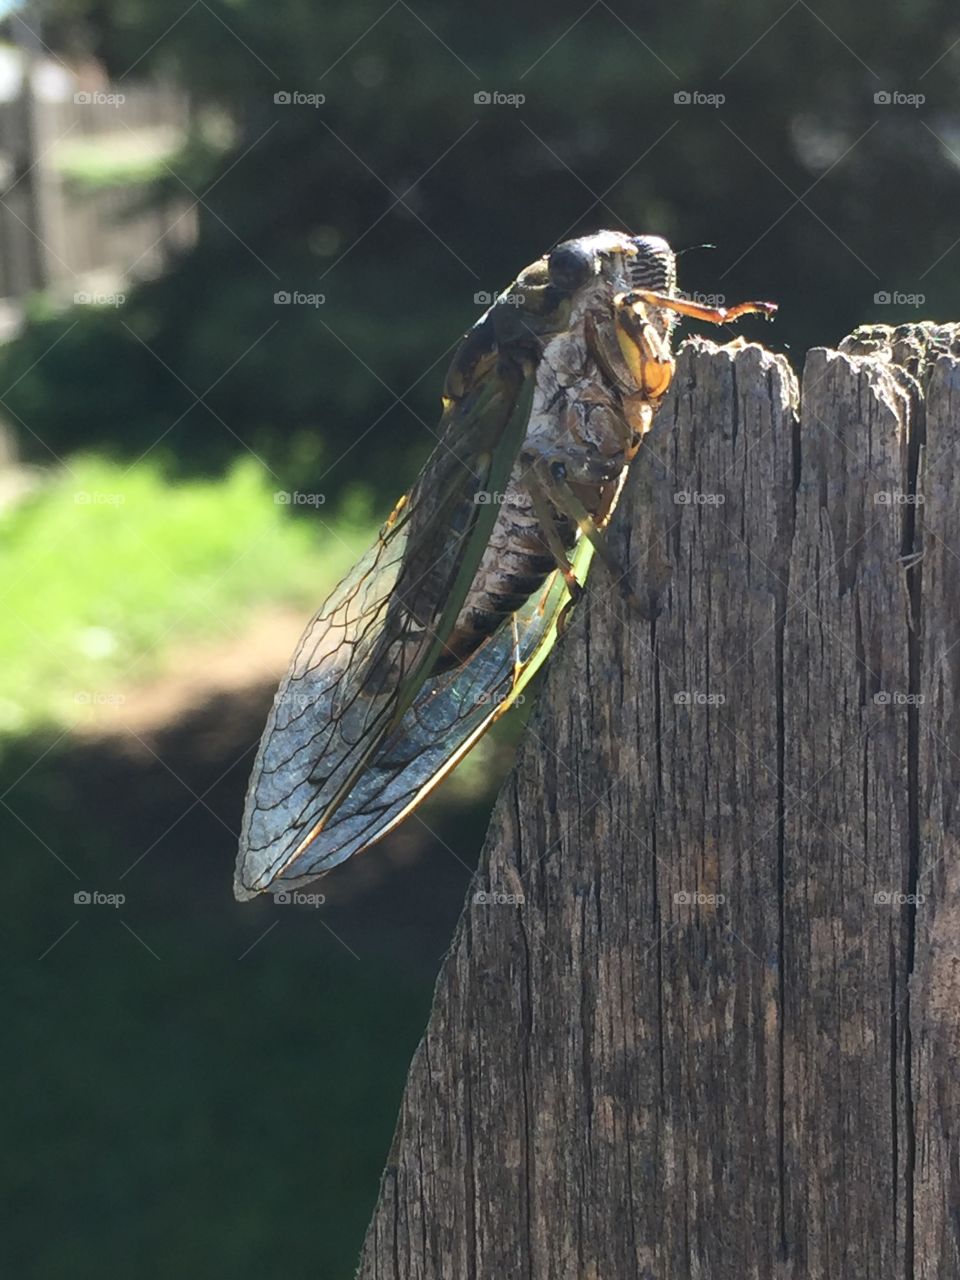 Cicada on a fence post